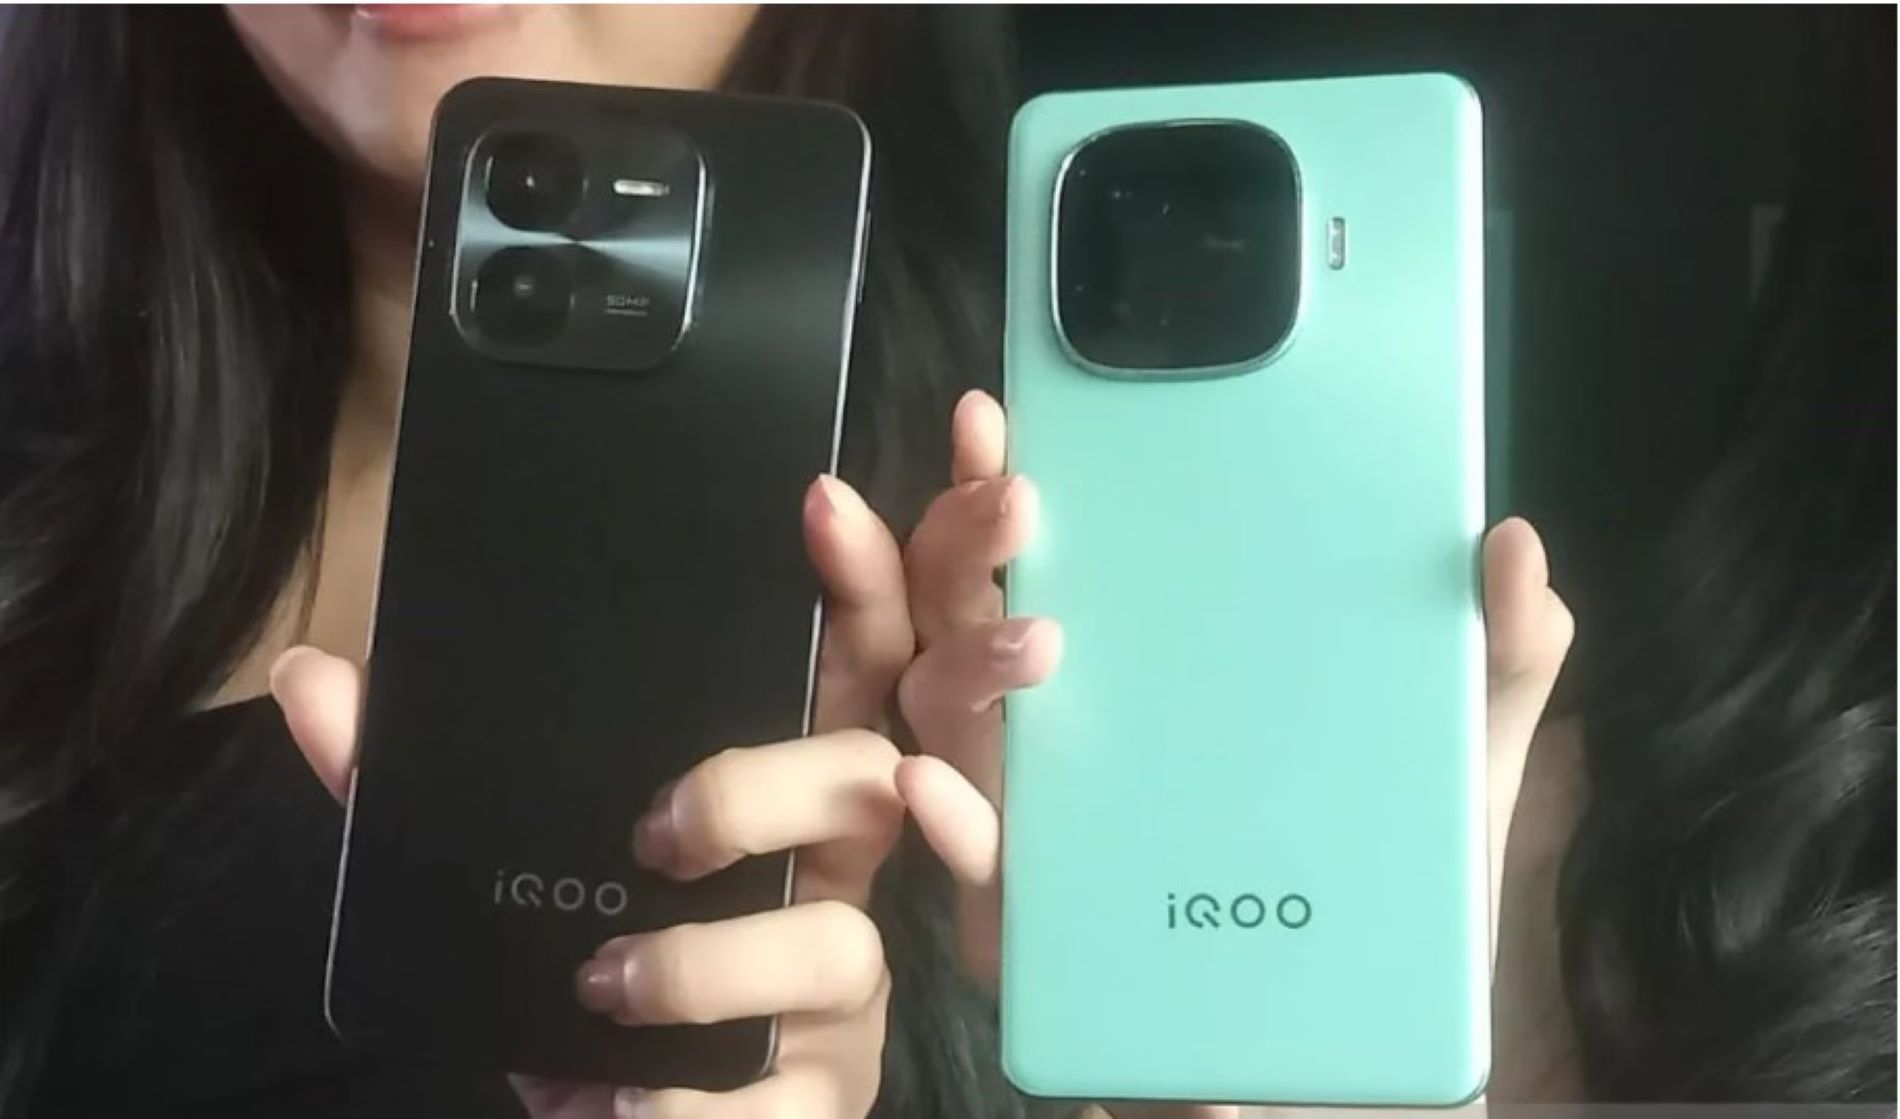 Tampilan ponsel baru keluaran iQOO yakni iQOO Z9 (kanan) dan iQOO Z9x (kiri)/